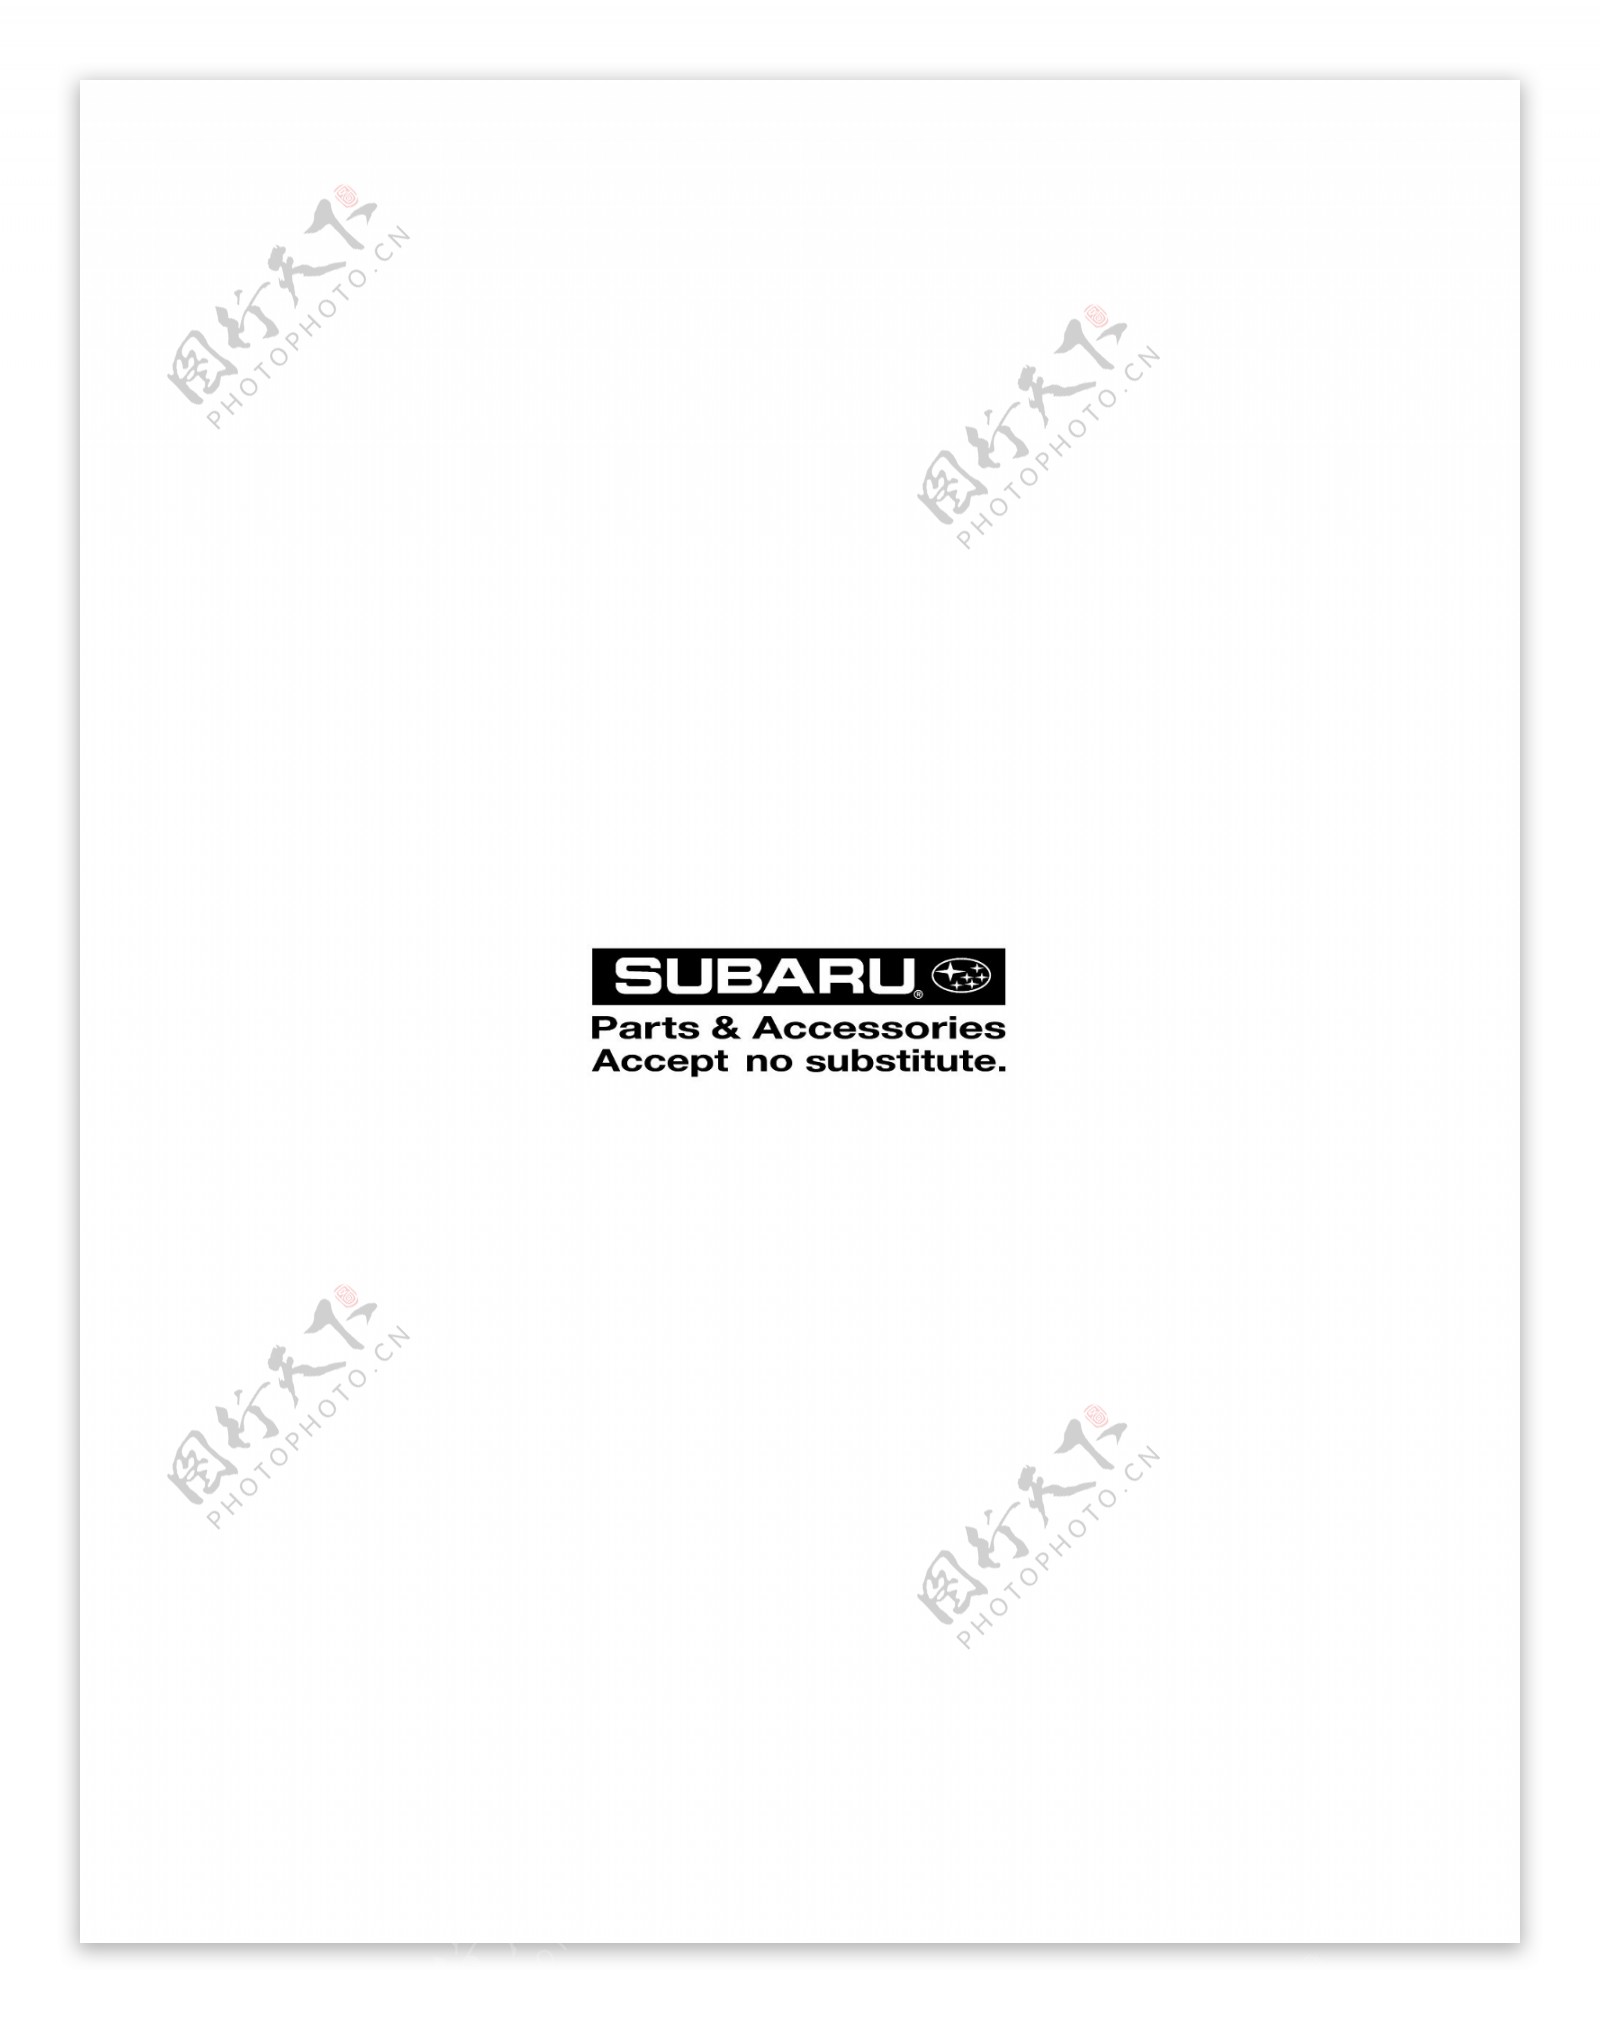 SubaruPartsandAccessorieslogo设计欣赏SubaruPartsandAccessories矢量名车logo下载标志设计欣赏